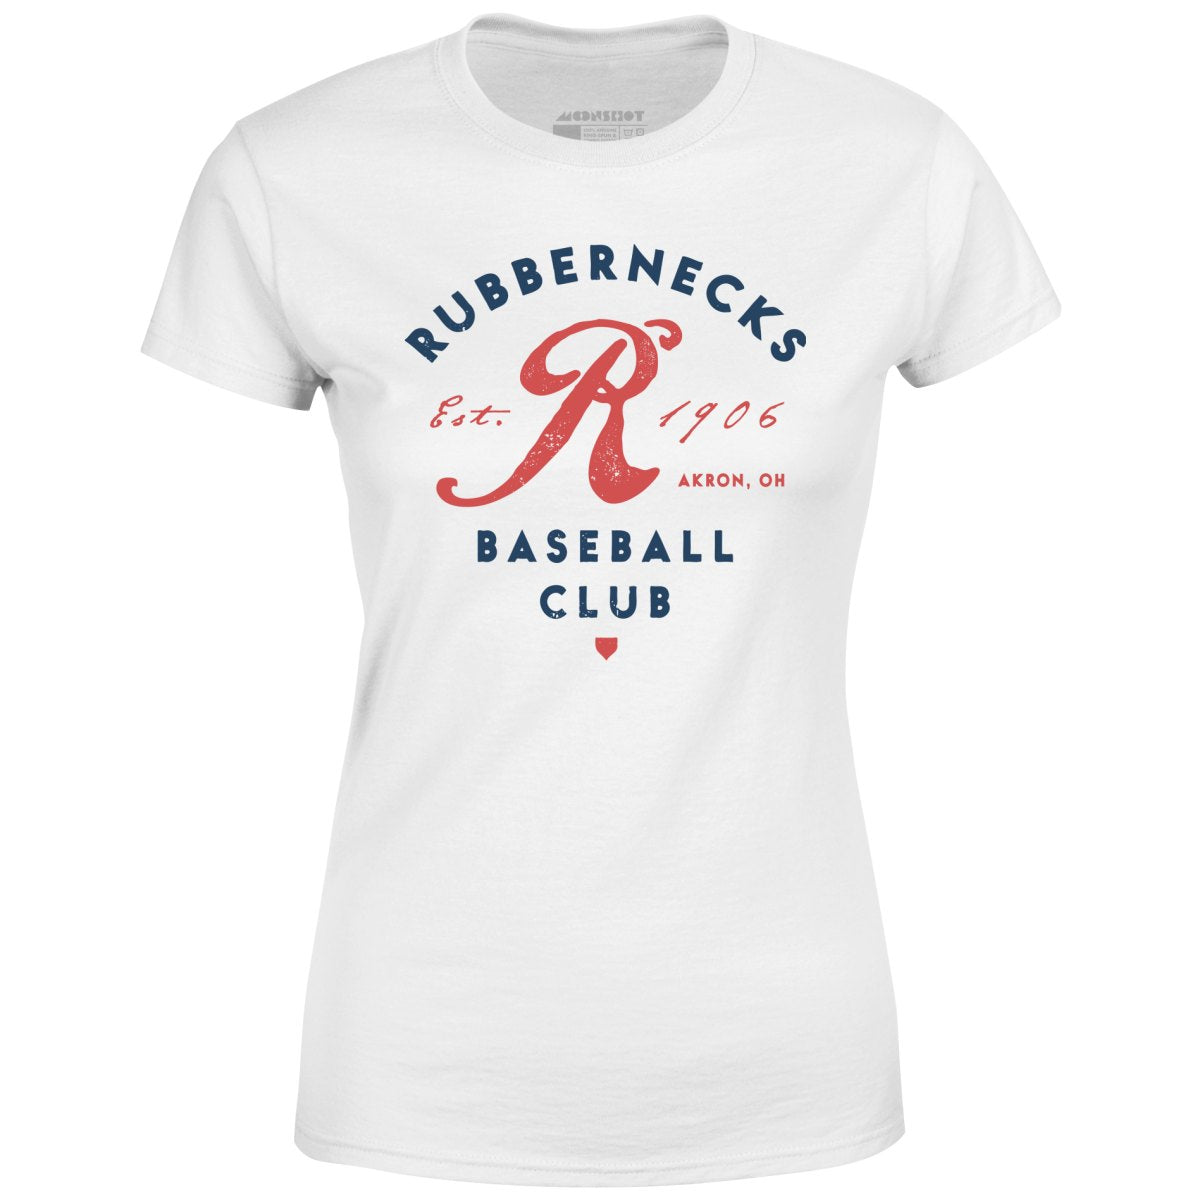 Akron Rubbernecks - Ohio - Vintage Defunct Baseball Teams - Women's T-Shirt